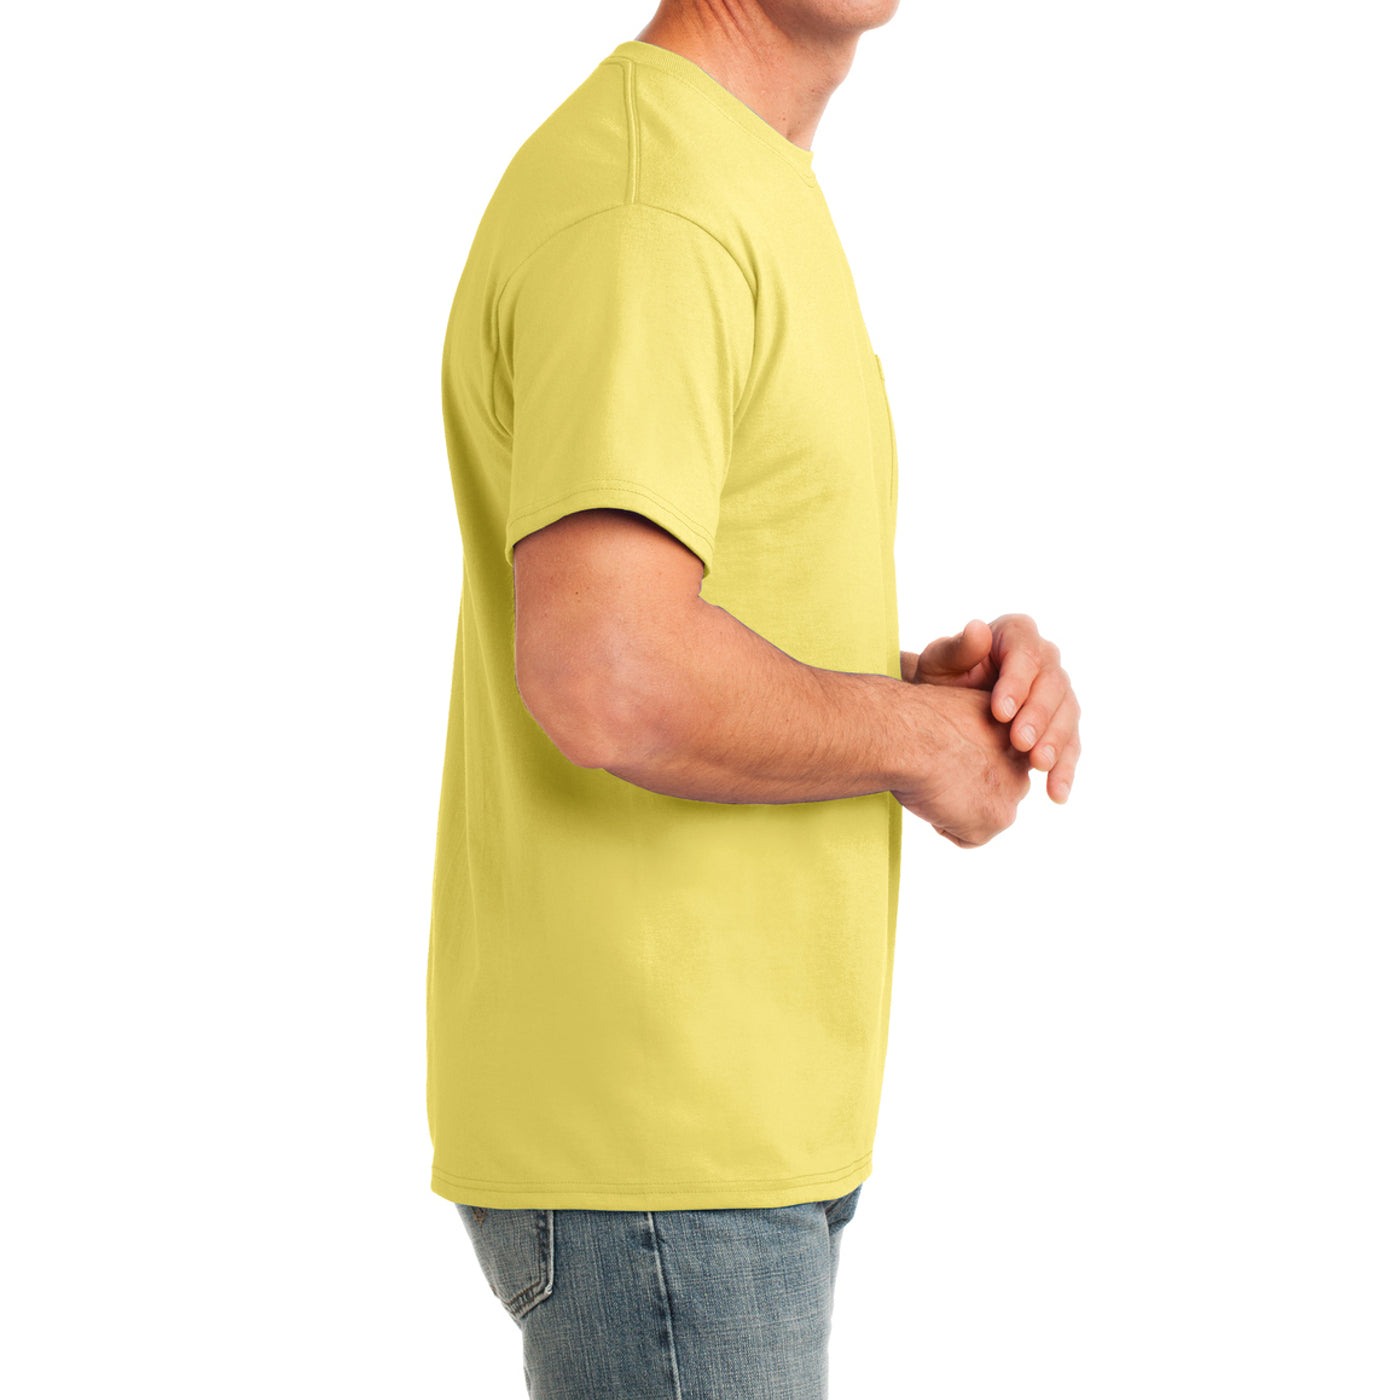 Men's Core Cotton Pocket Tee - Yellow - Side